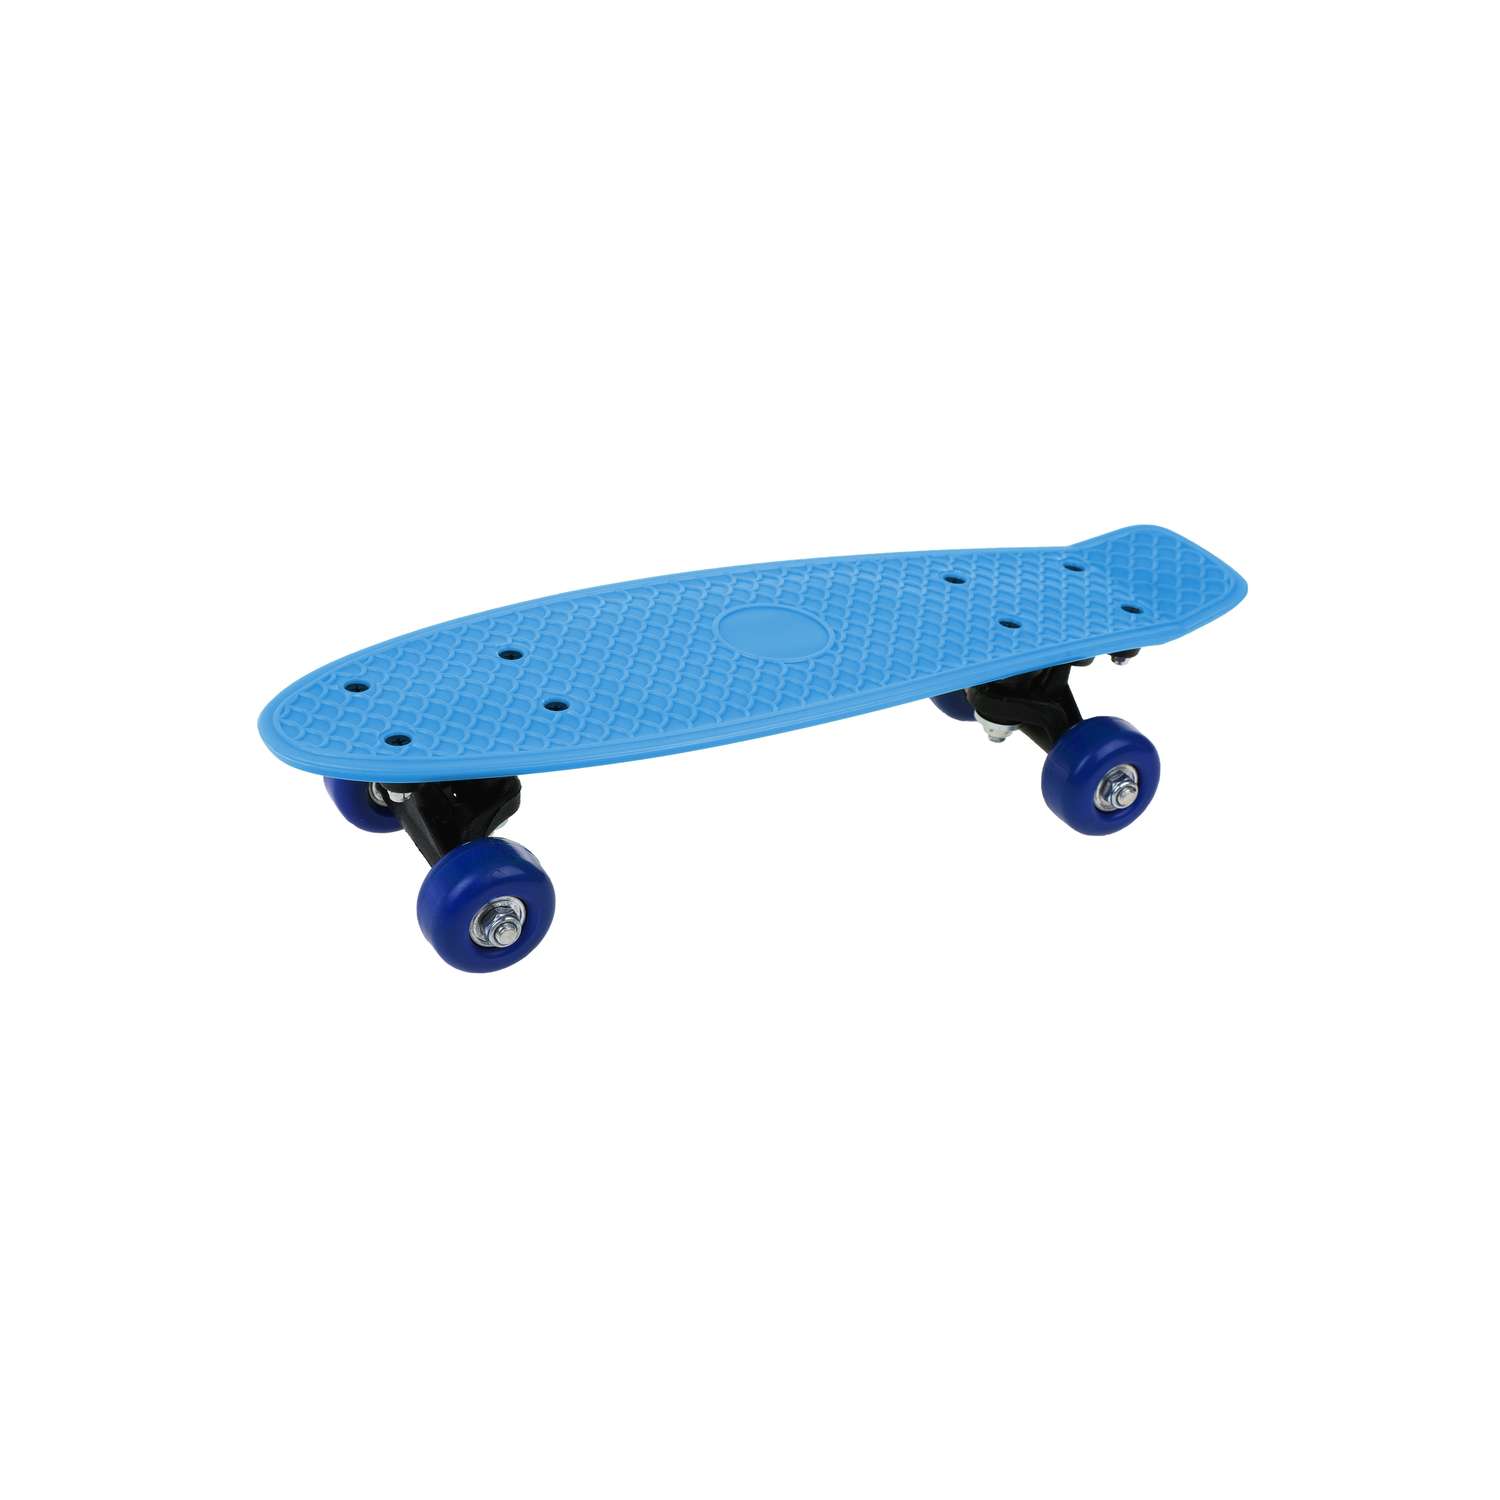 Скейтборд Наша Игрушка пенниборд 41х12 см колеса PVC крепления пластик голубой - фото 5